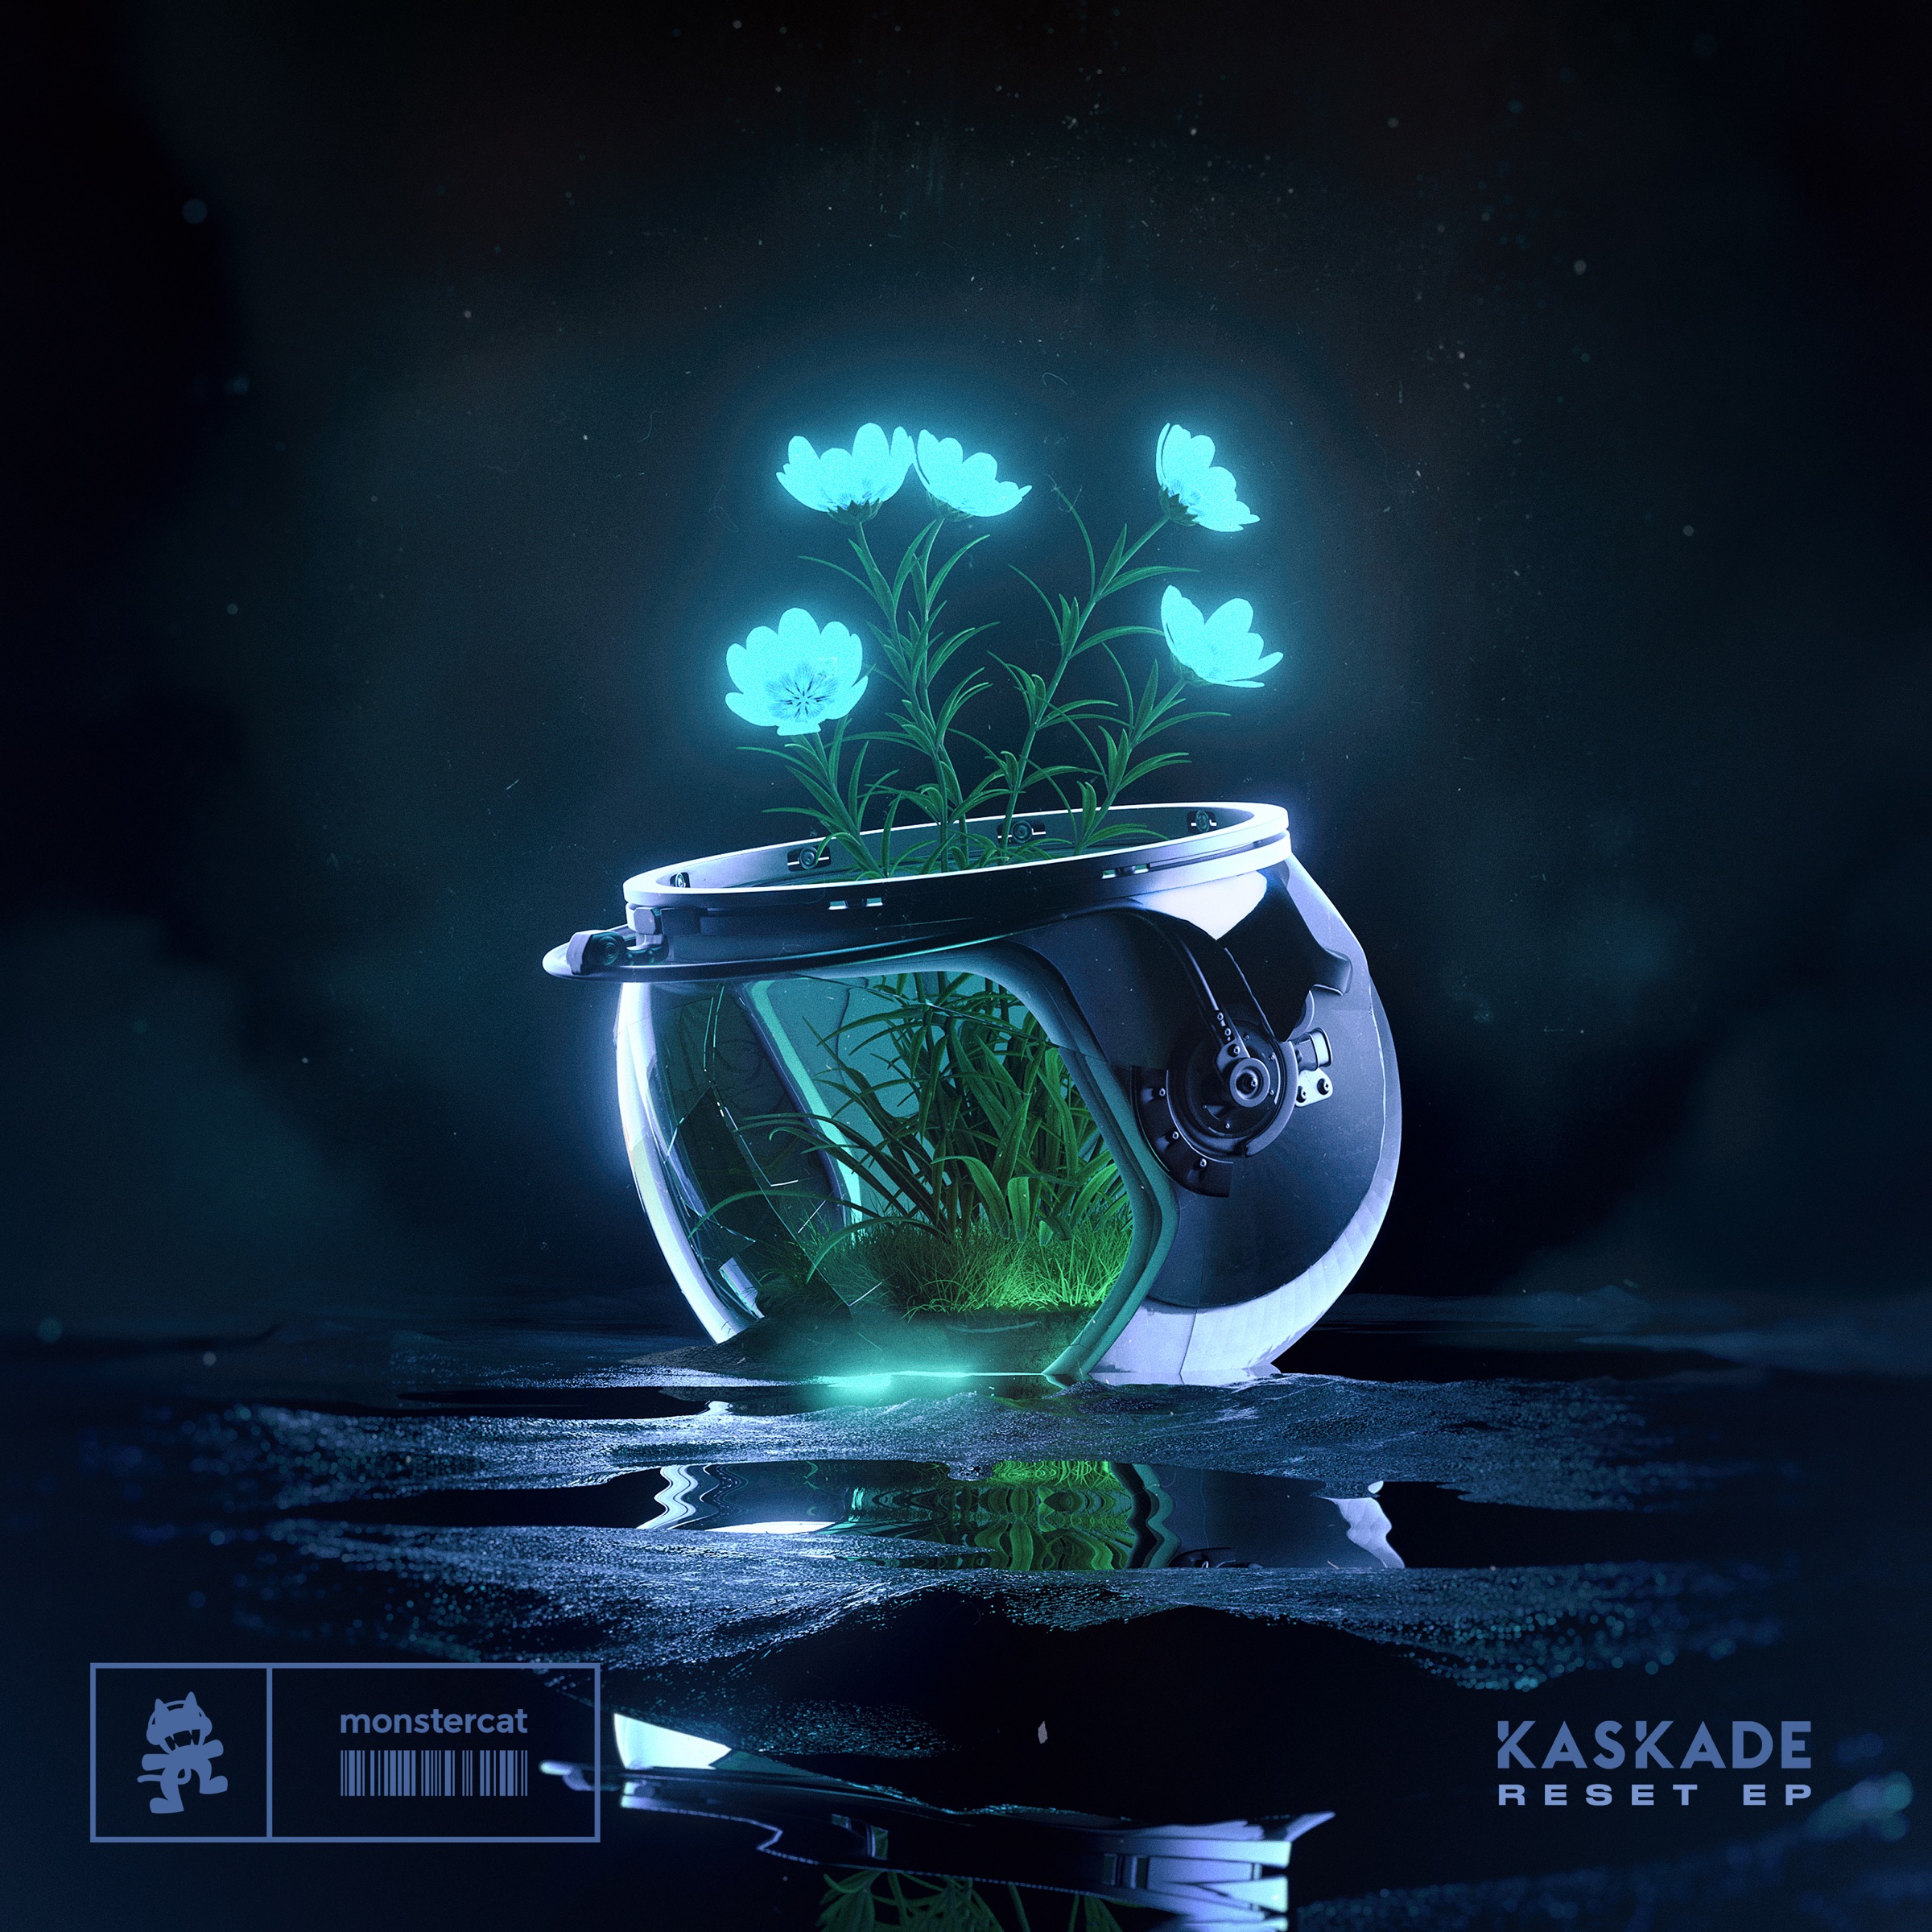 Kaskade Reset EP cover artwork